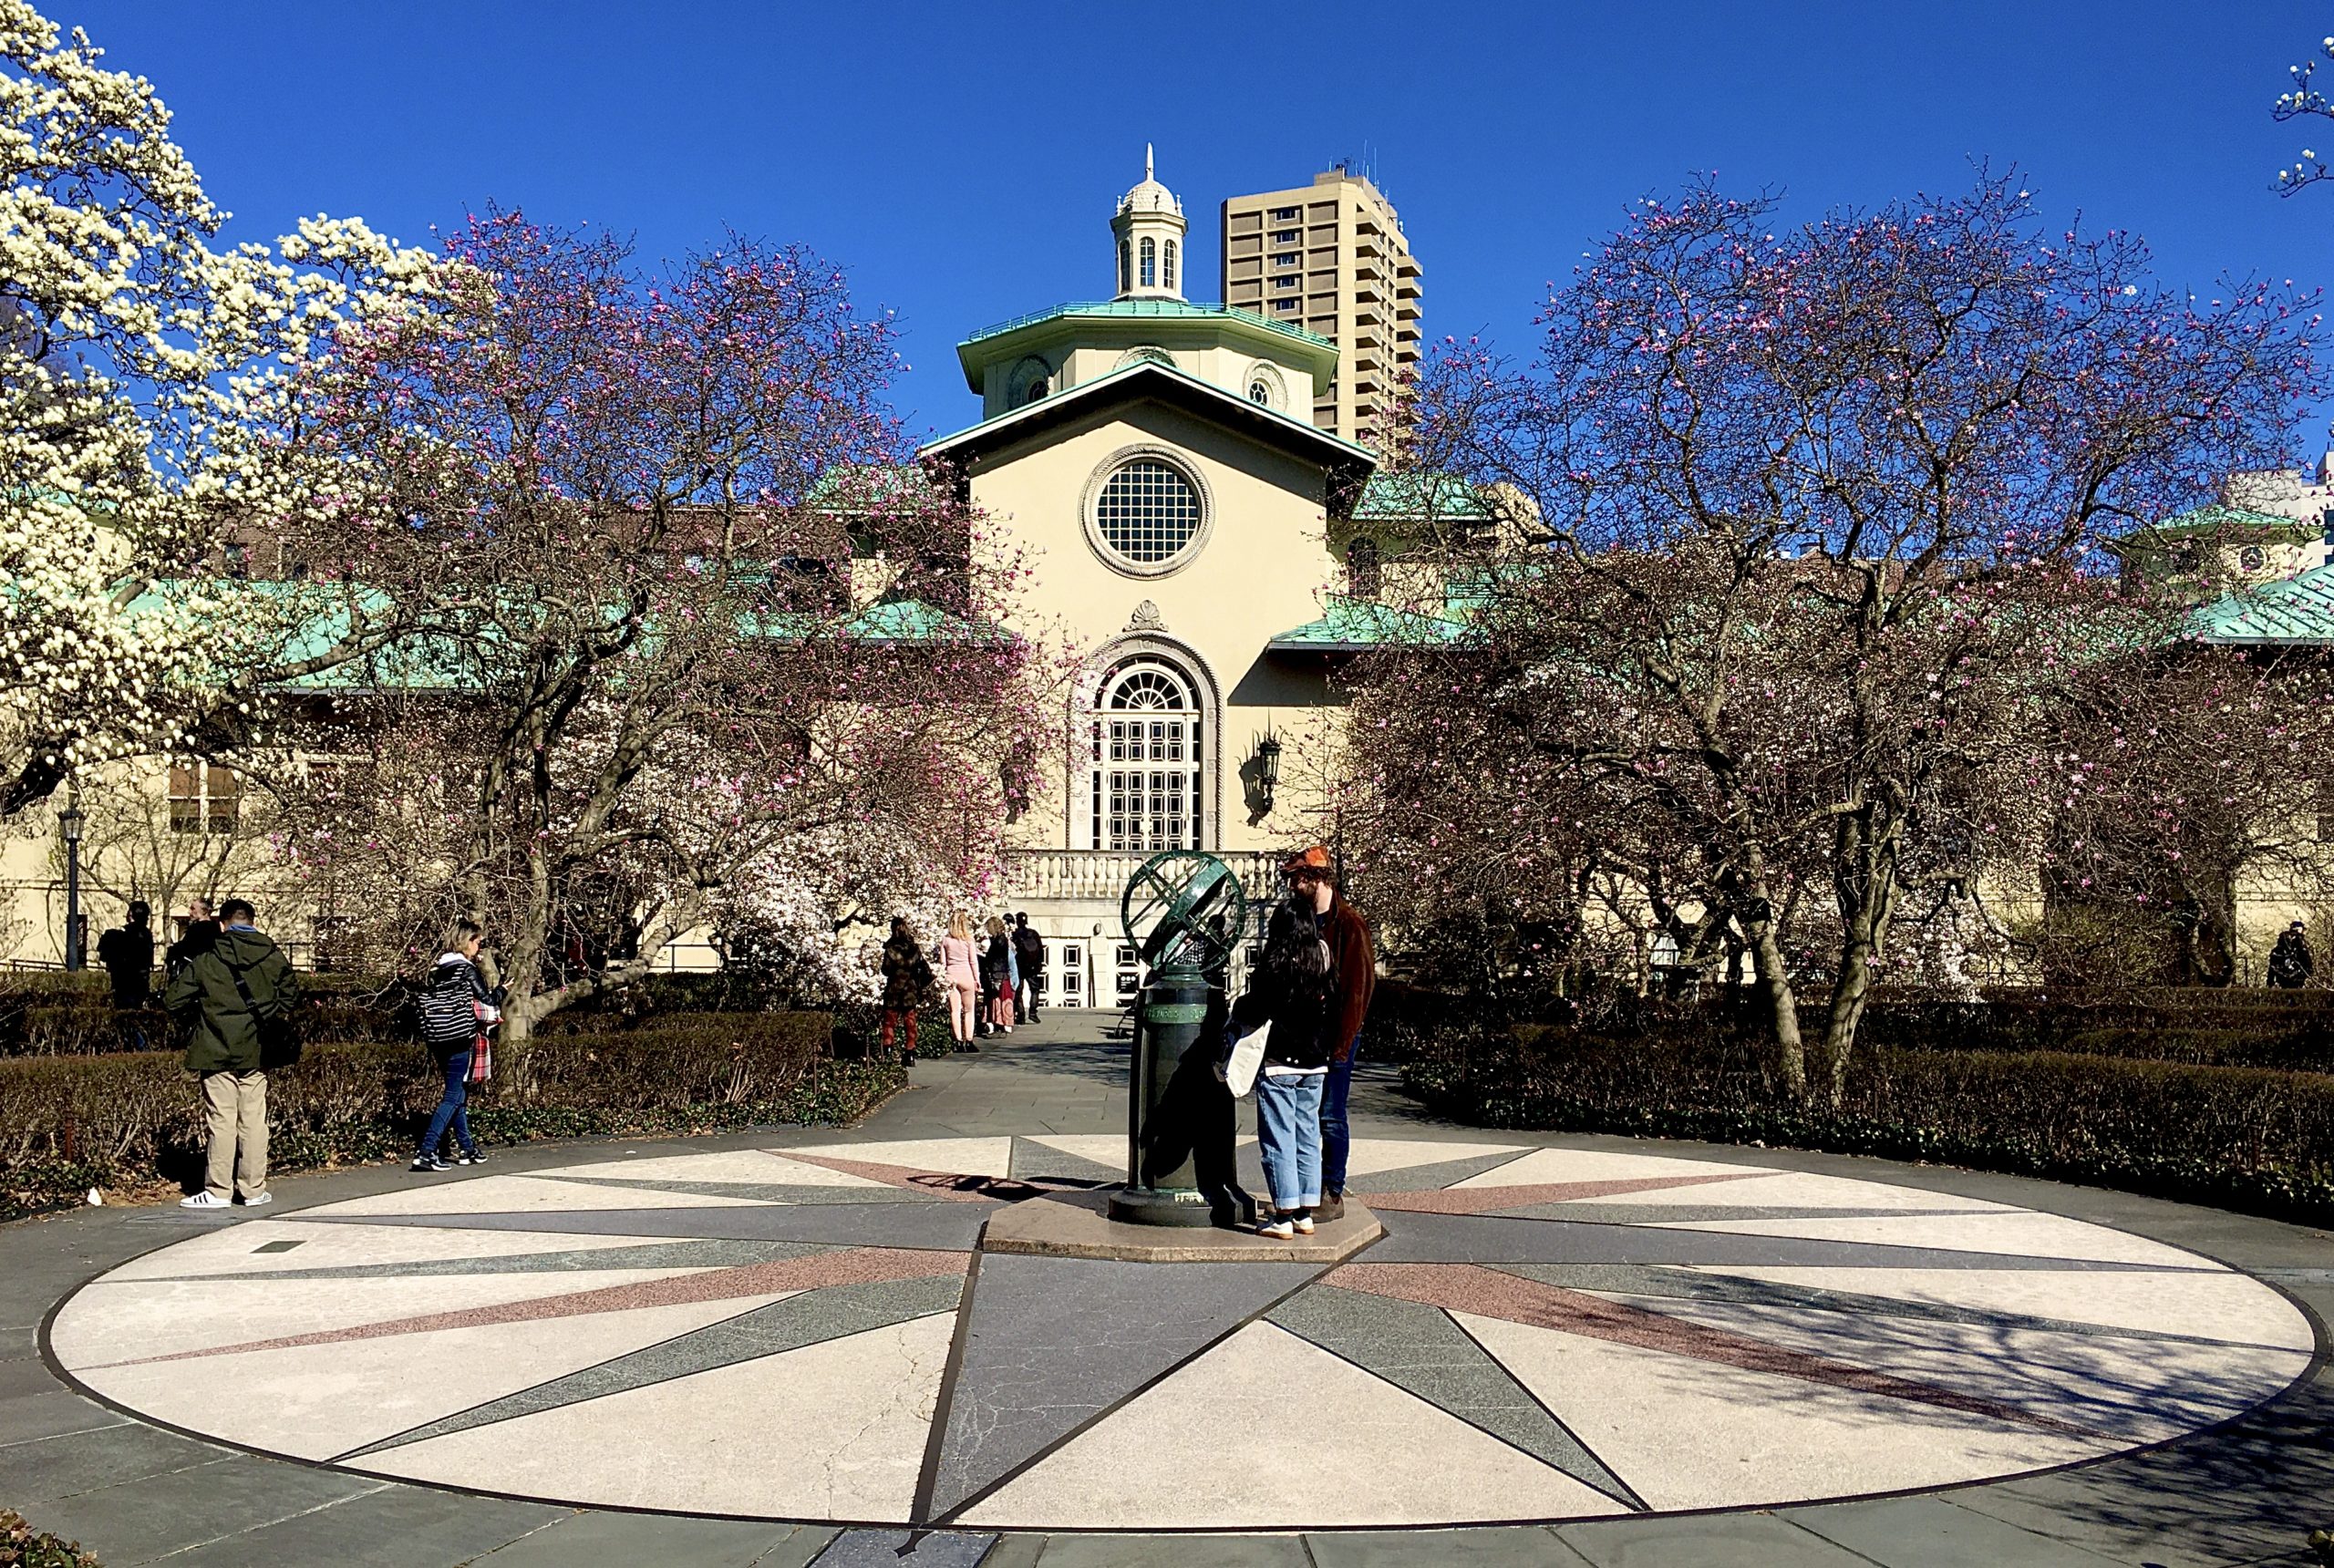 The scene was serene on the last day Brooklyn Botanic Garden was open. Photo: Lore Croghan/Brooklyn Eagle